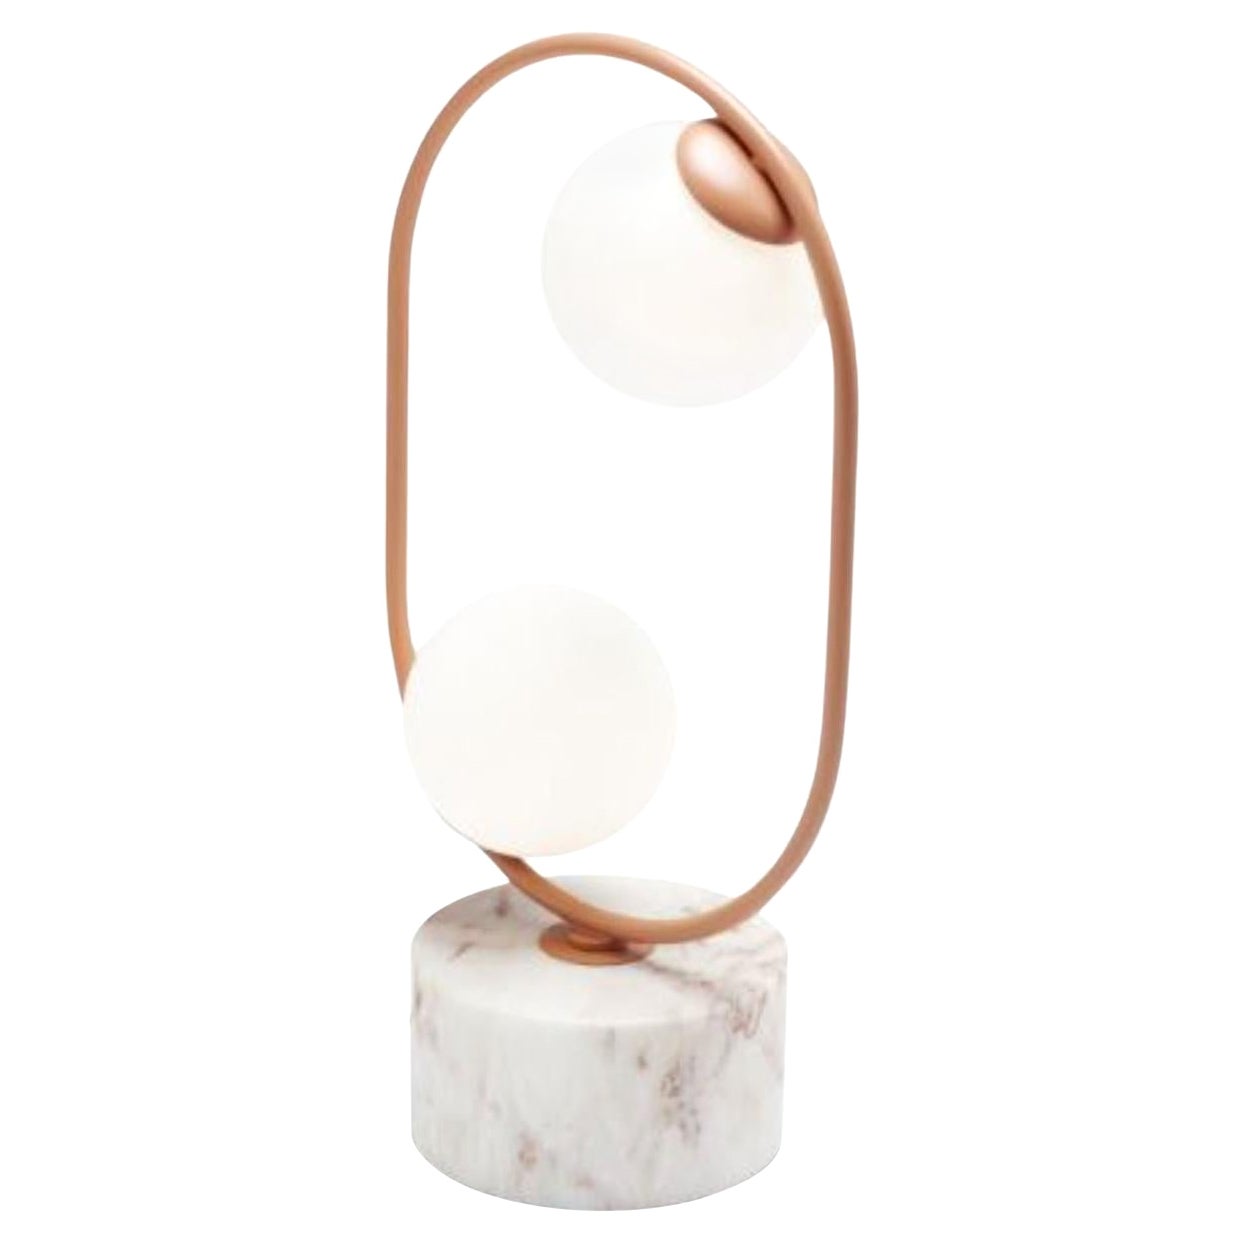 Lampe de table Salmon Loop I avec base en marbre par Dooq